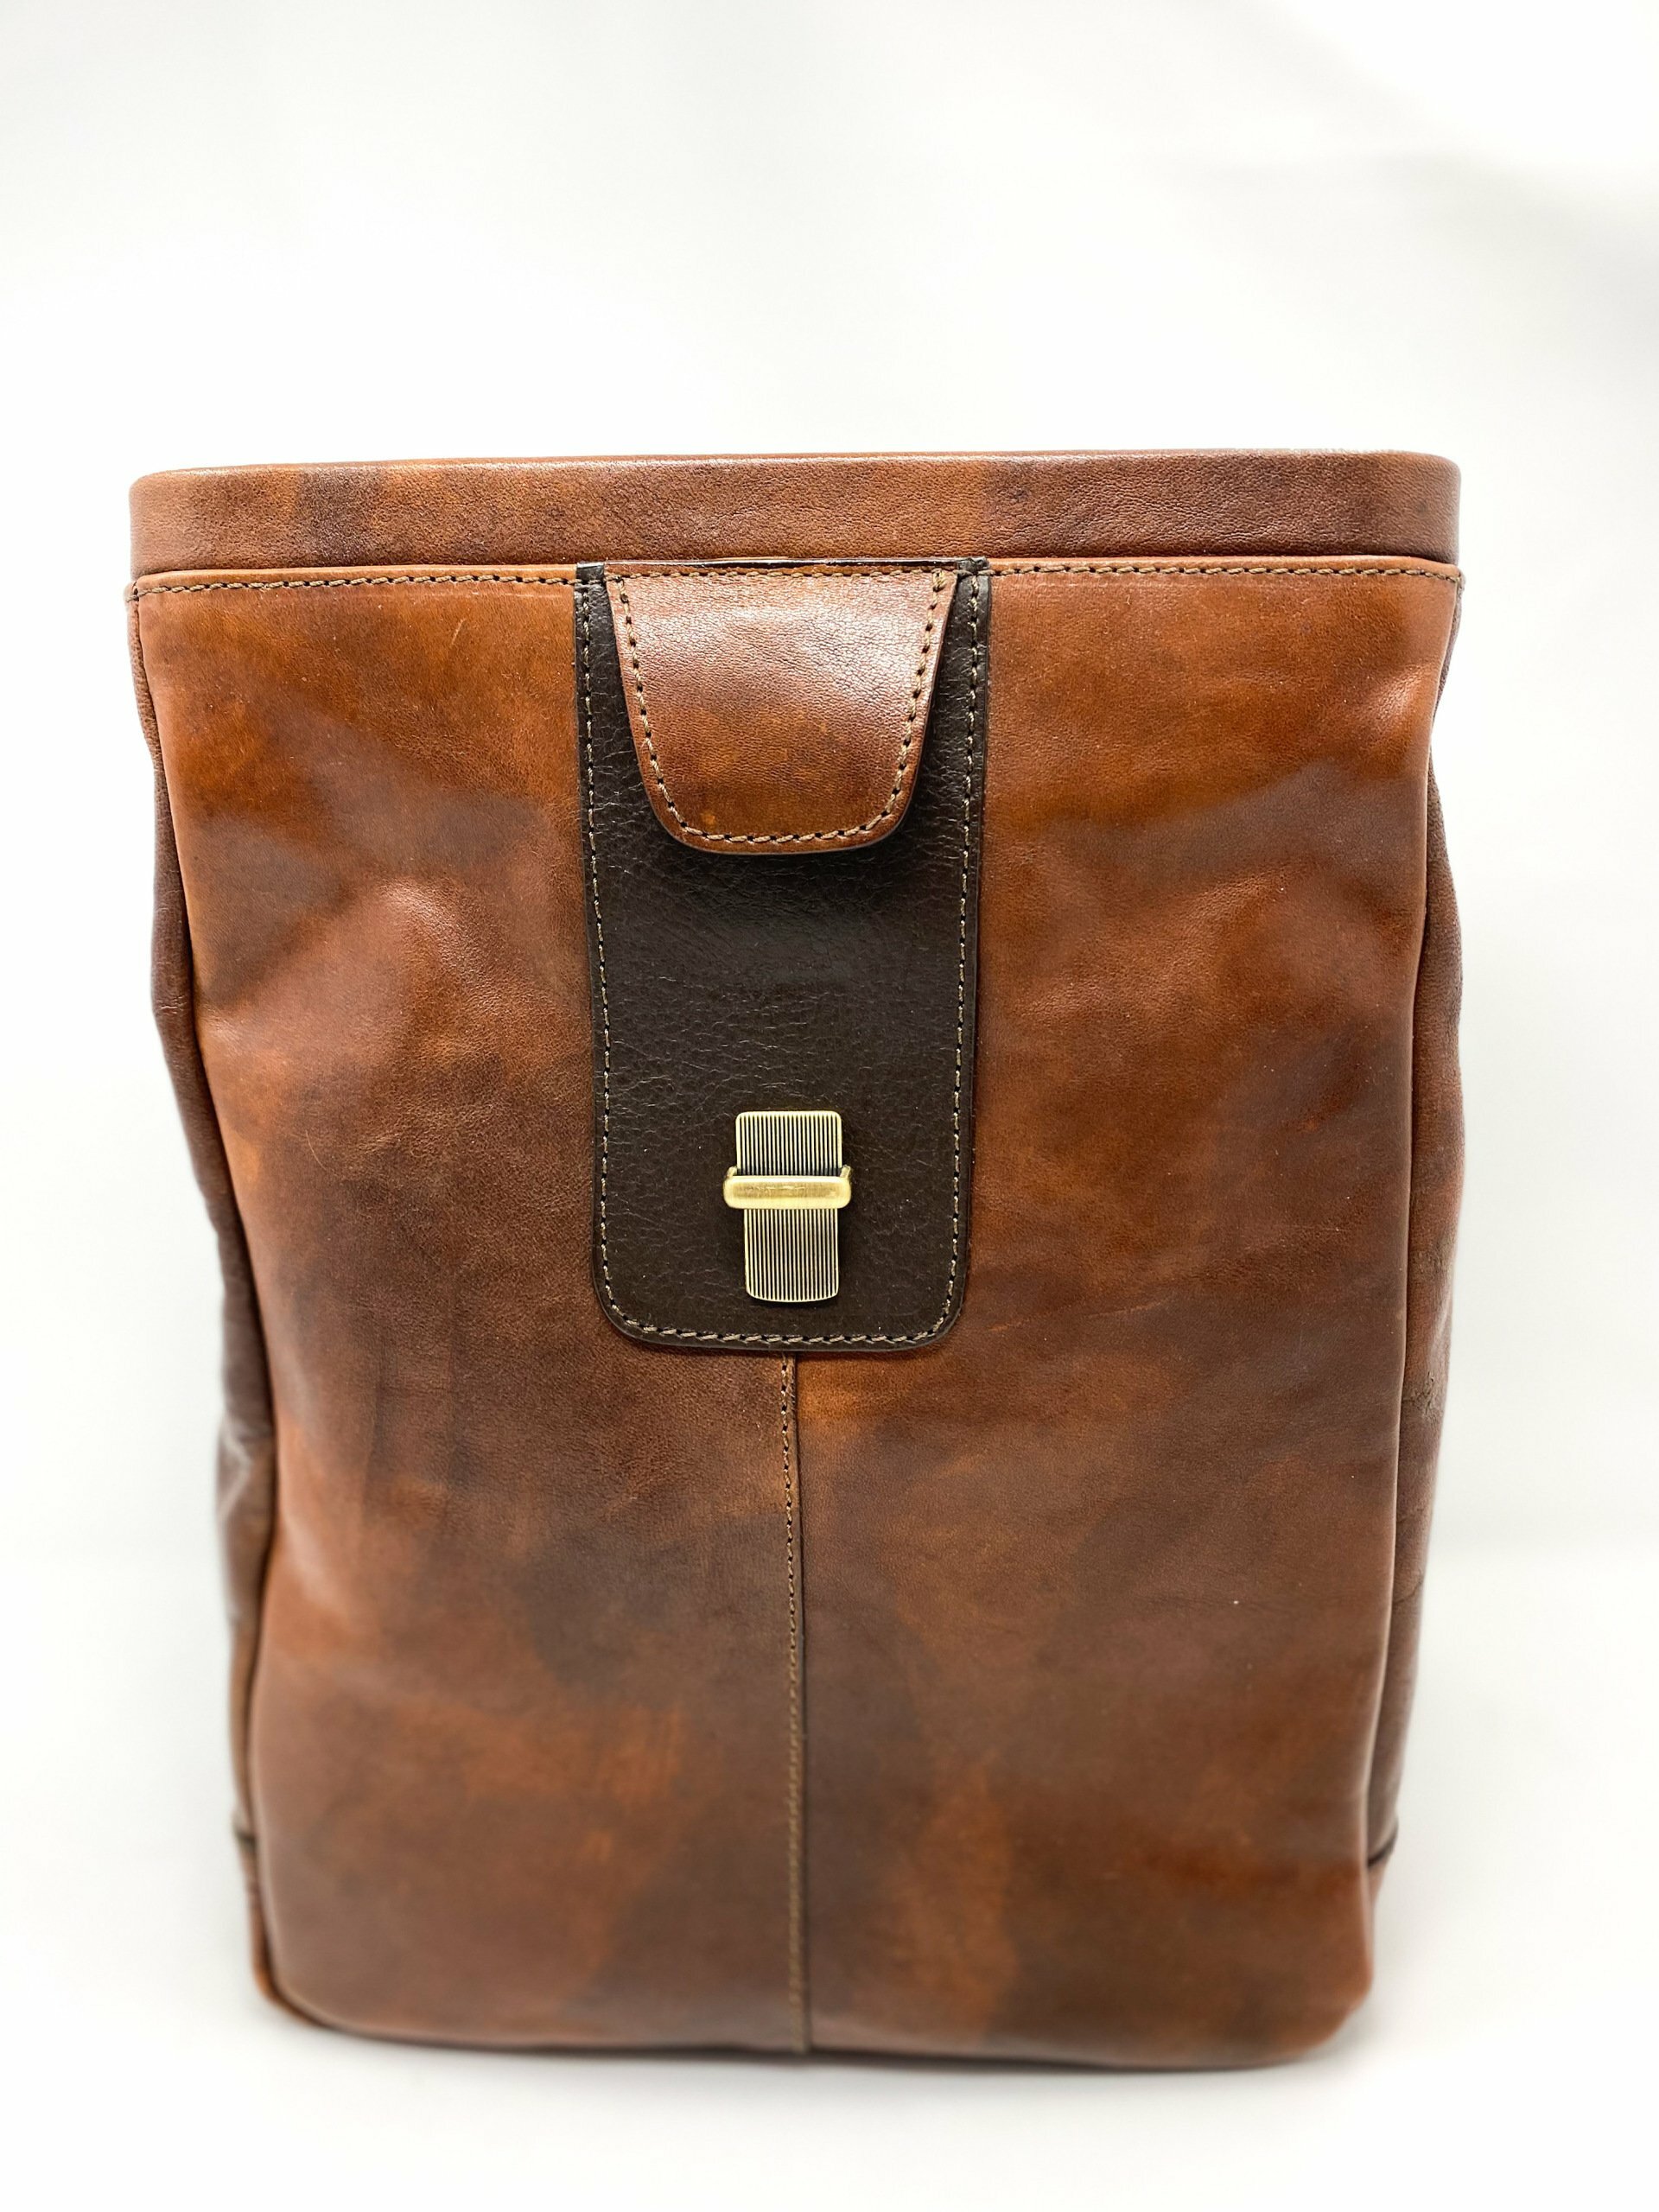 Chiarugi Medium Dark Brown Leather Doctor Bag at FORZIERI